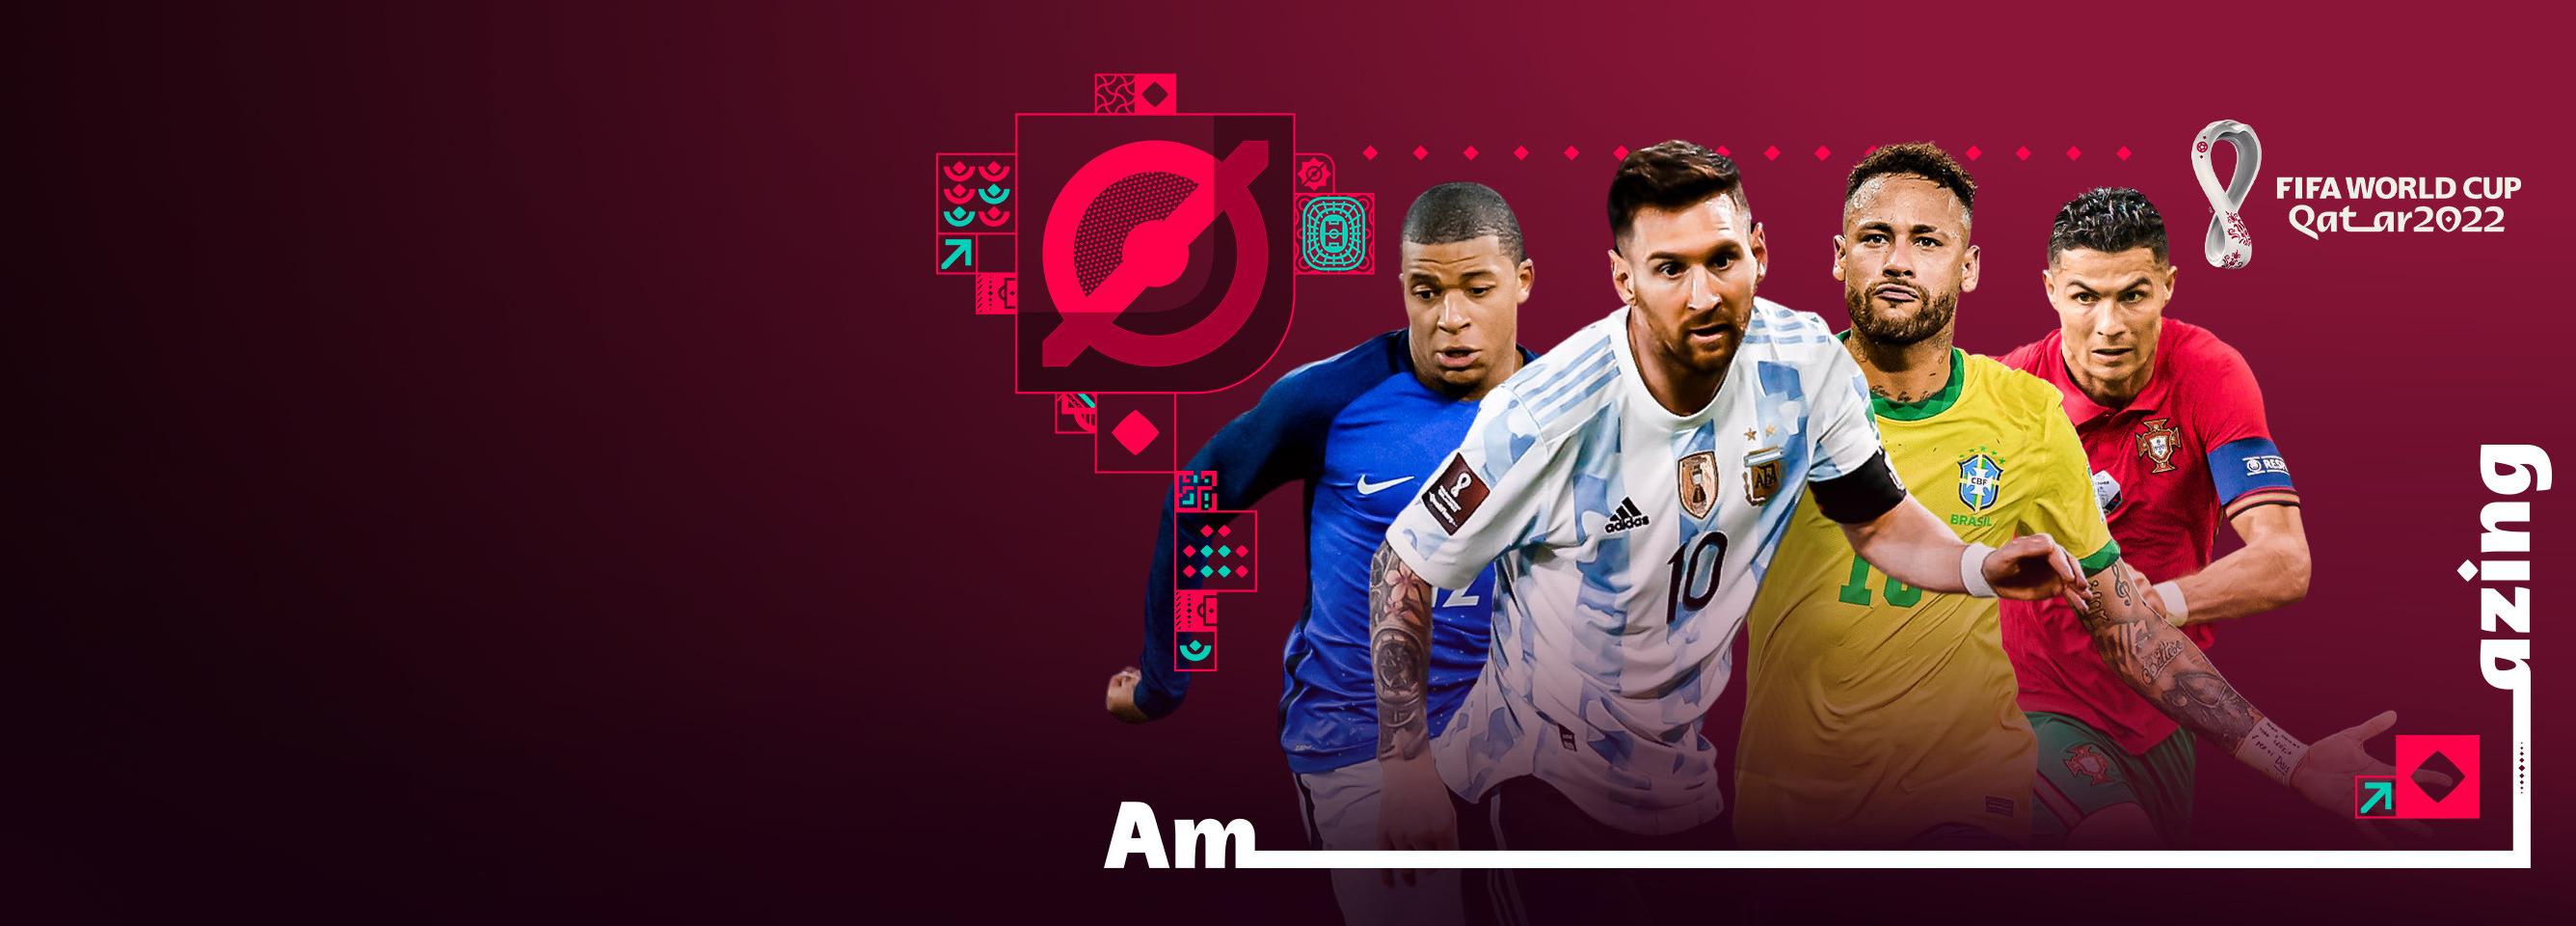 Piala Dunia Qatar 2022  Highlights & Live Streaming  Vidio